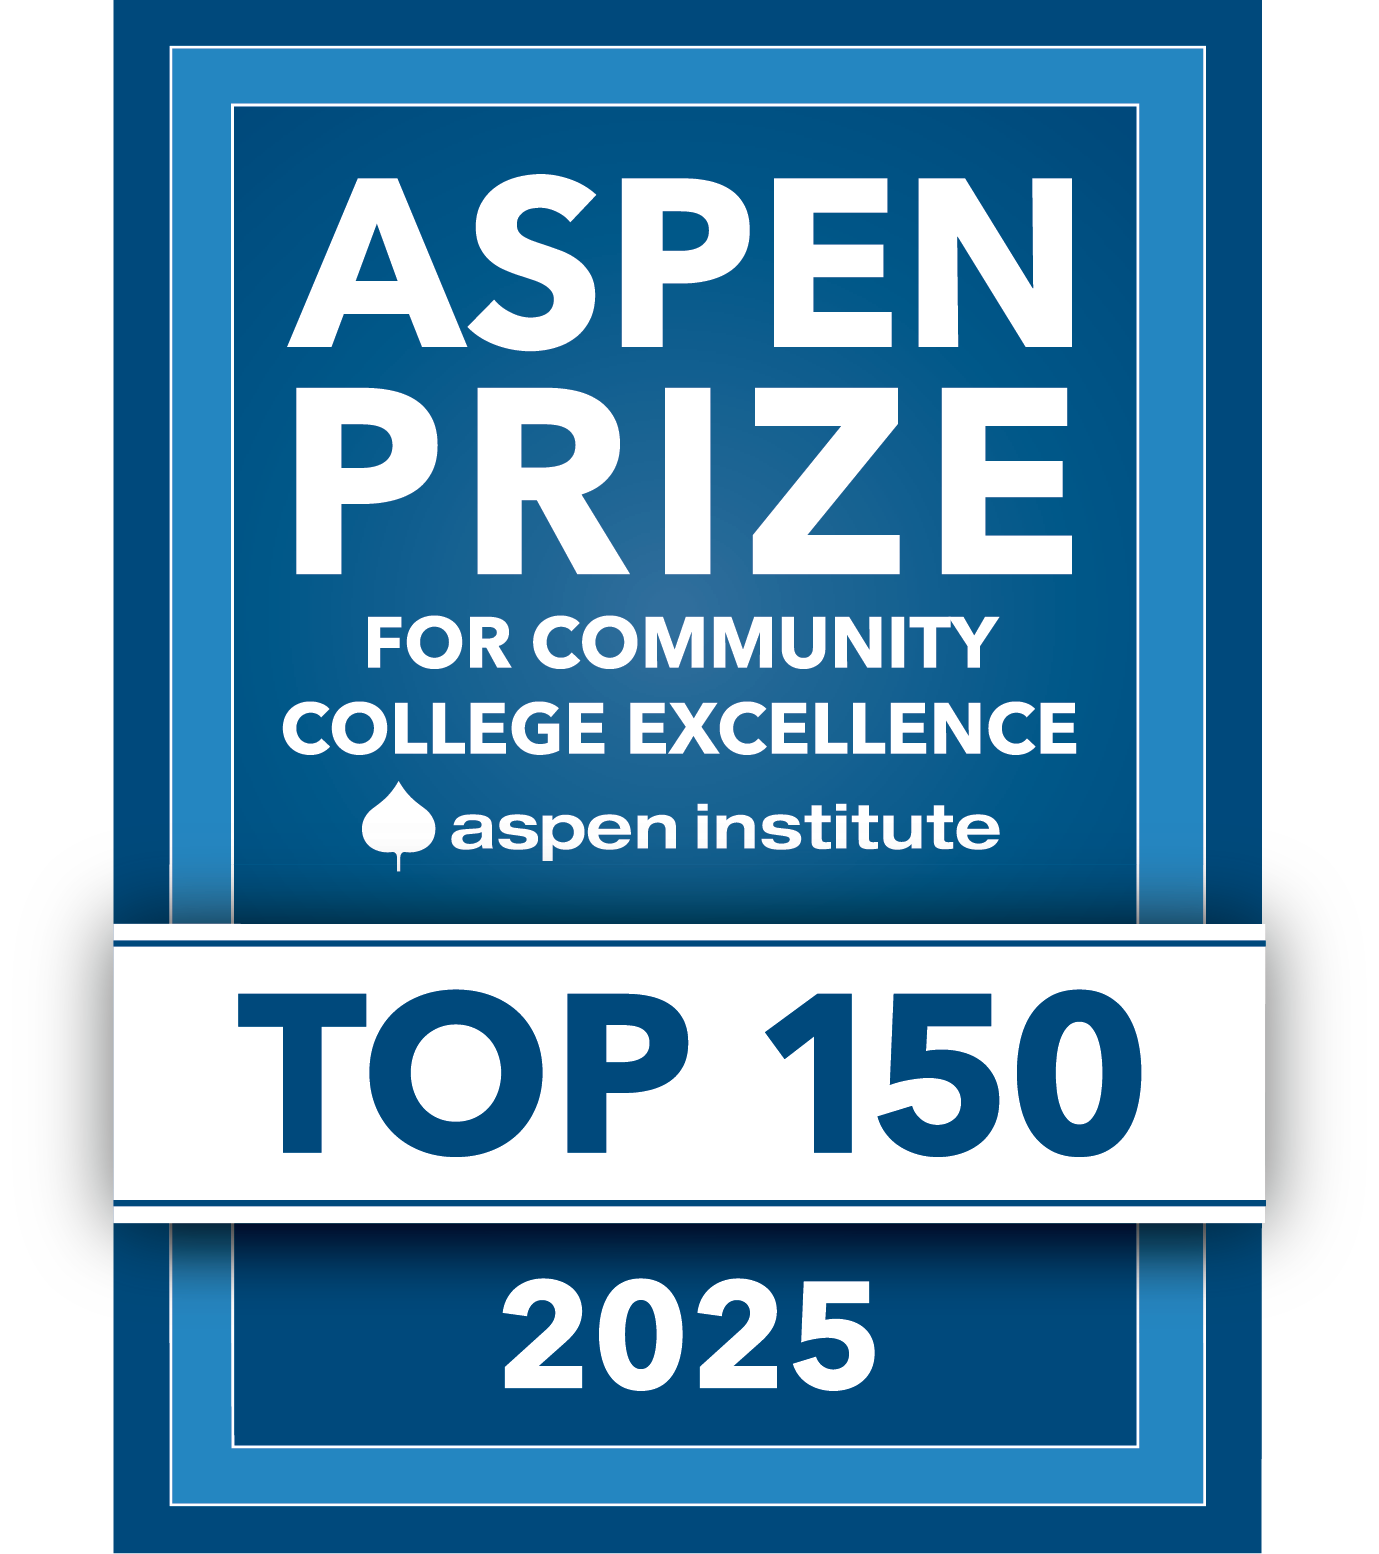 /news/2023/media/aspen-prize-top-150.png